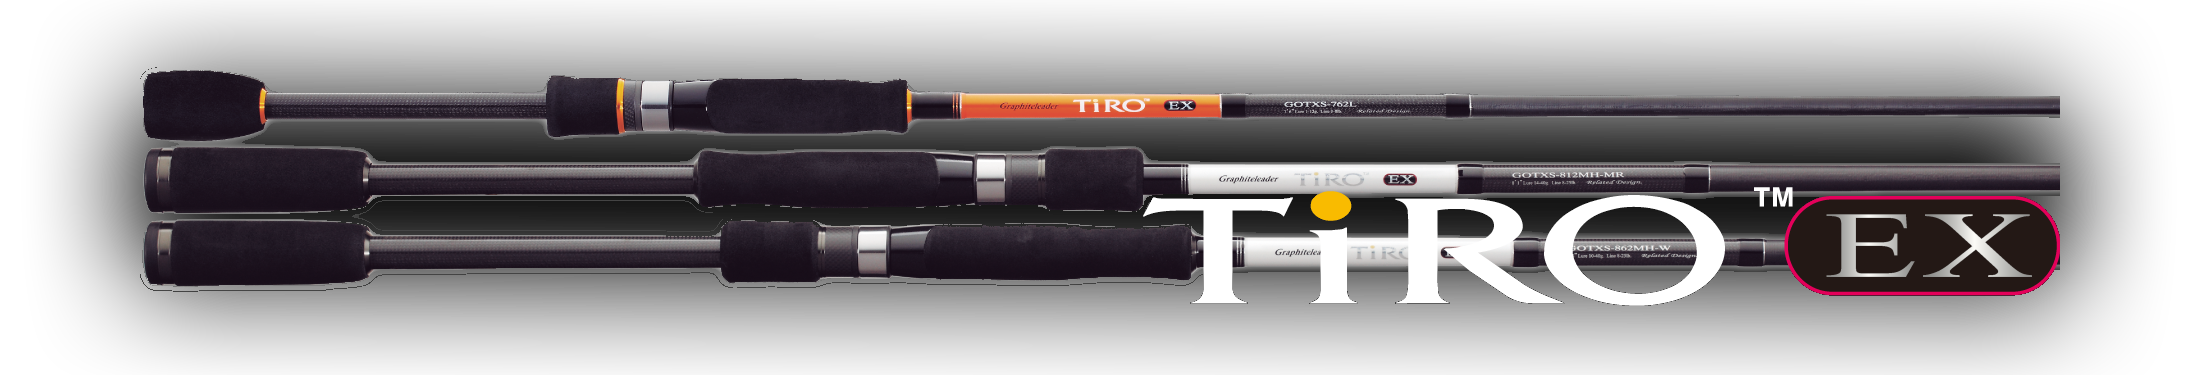 Спиннинг графитлидер тиро 4 22, преимущества моделей от graphiteleader tiro (prototype, ex)